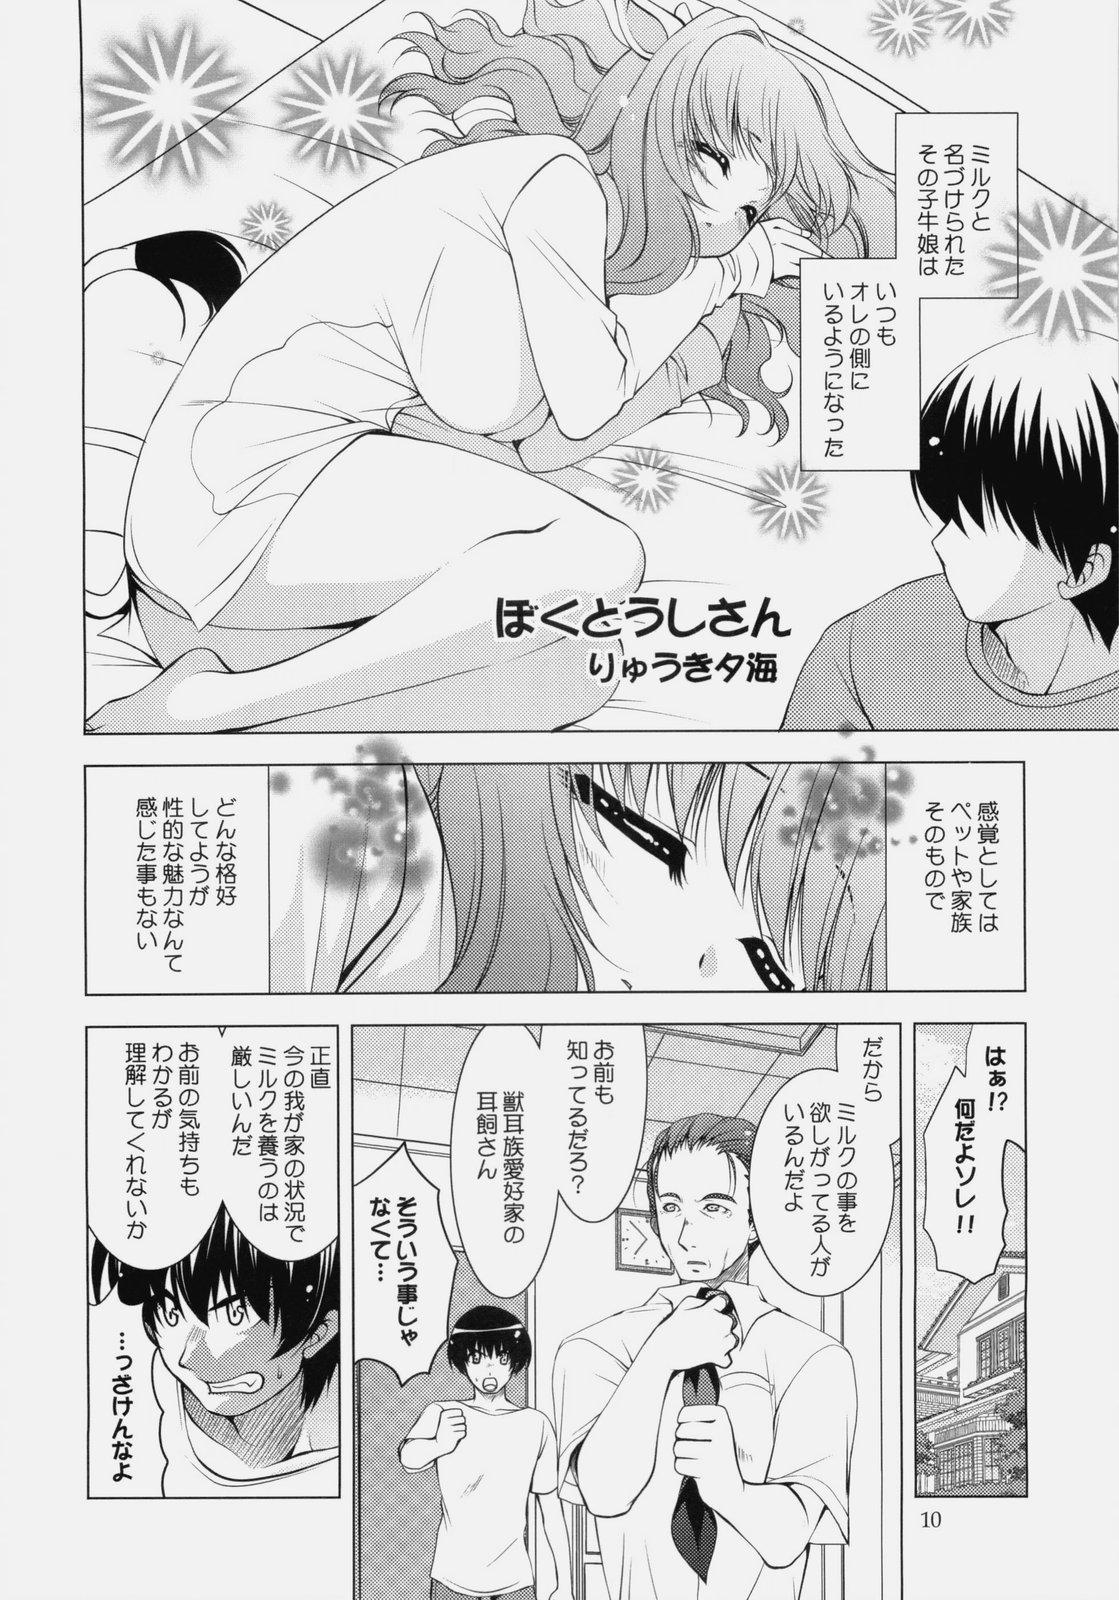 Erotica Ushisawagi Special Locations - Page 10